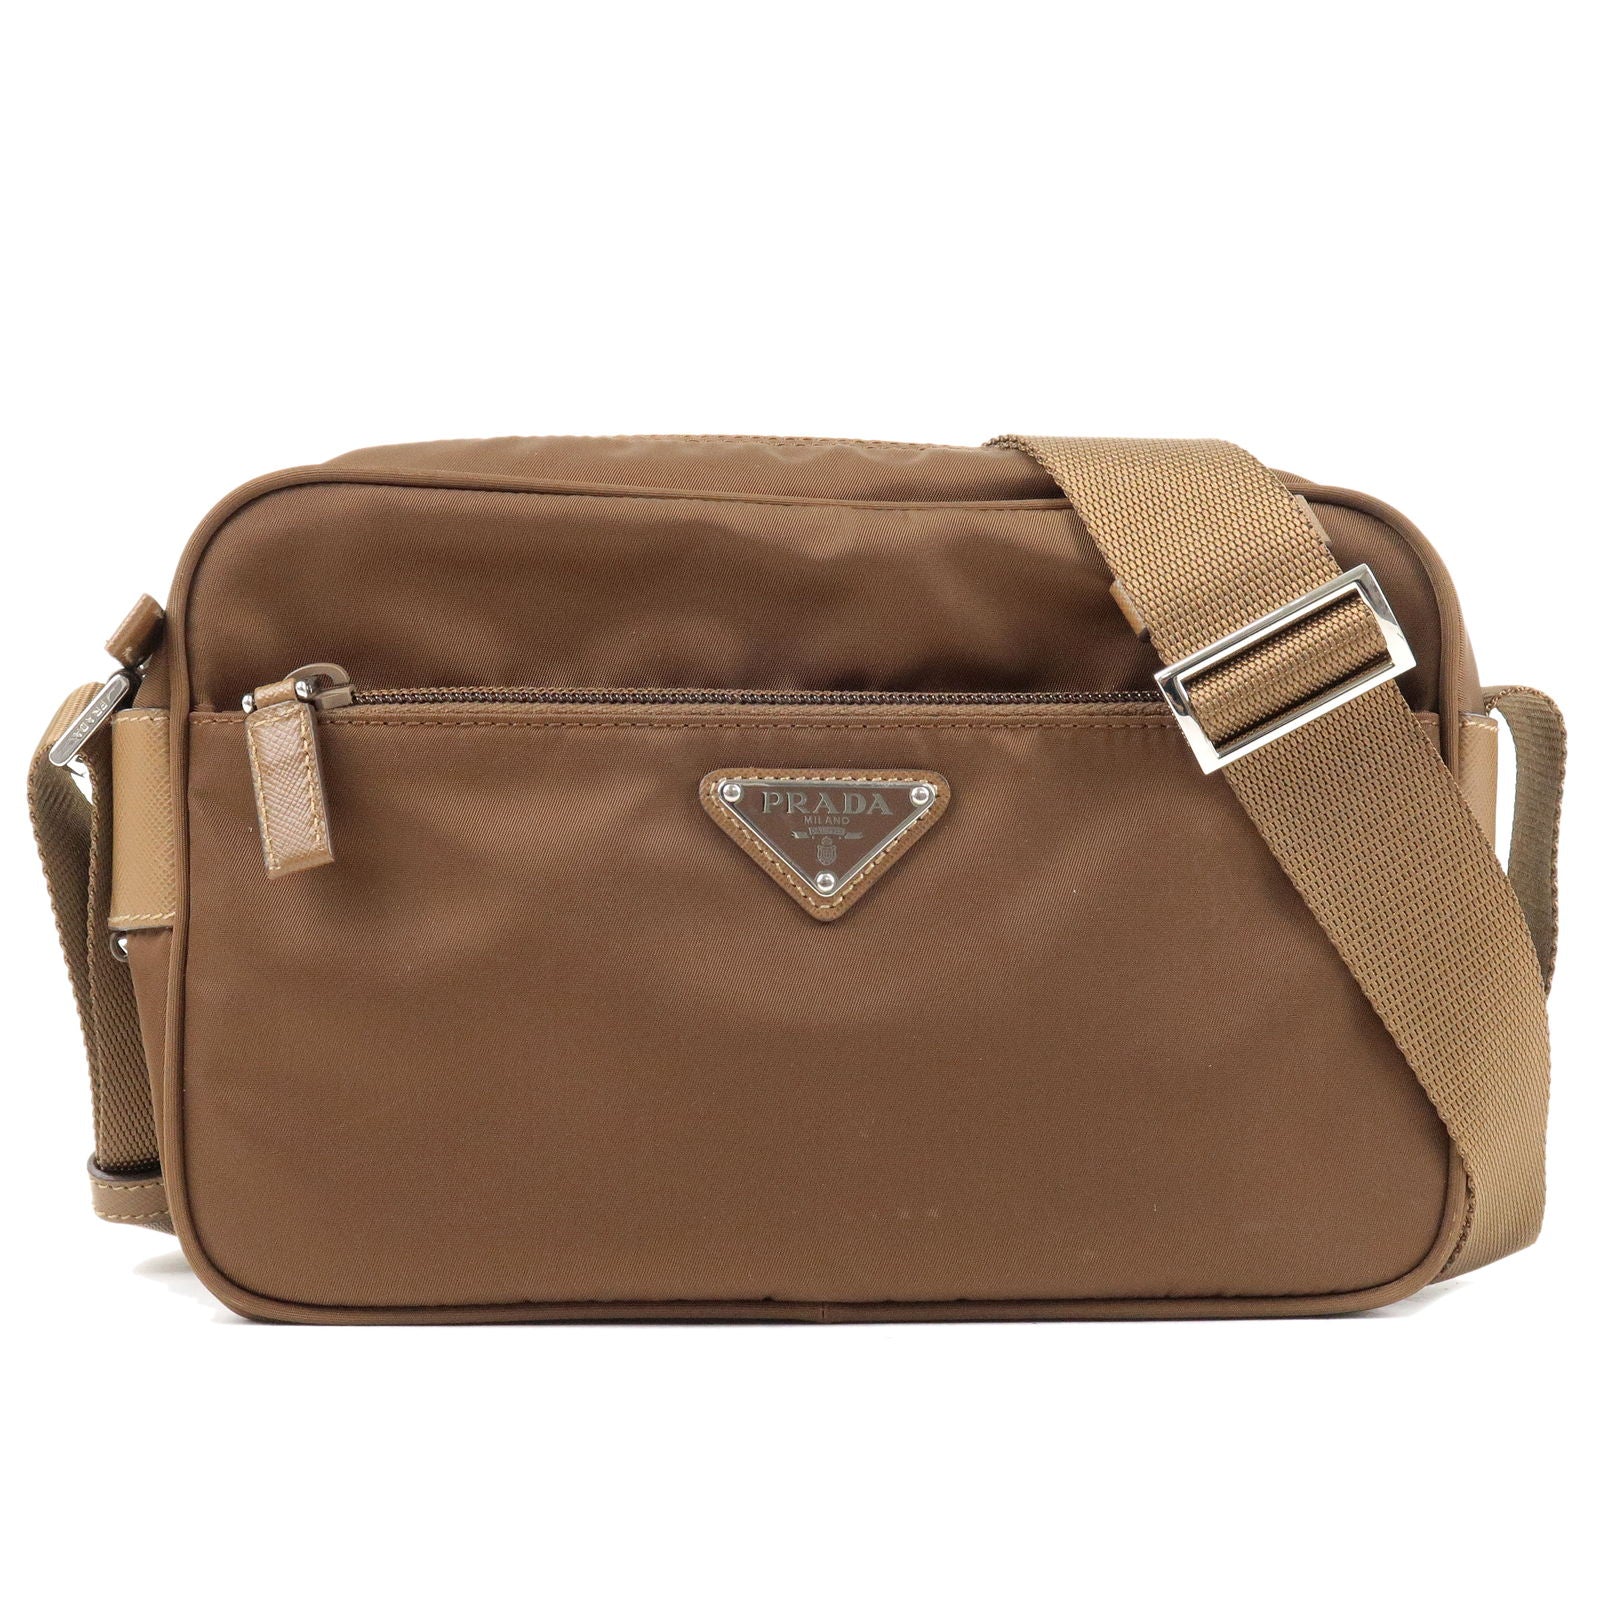 PRADA-Logo-Nylon-Leather-Shoulder-Bag-Crossbody-Bag-Brown-1BC167